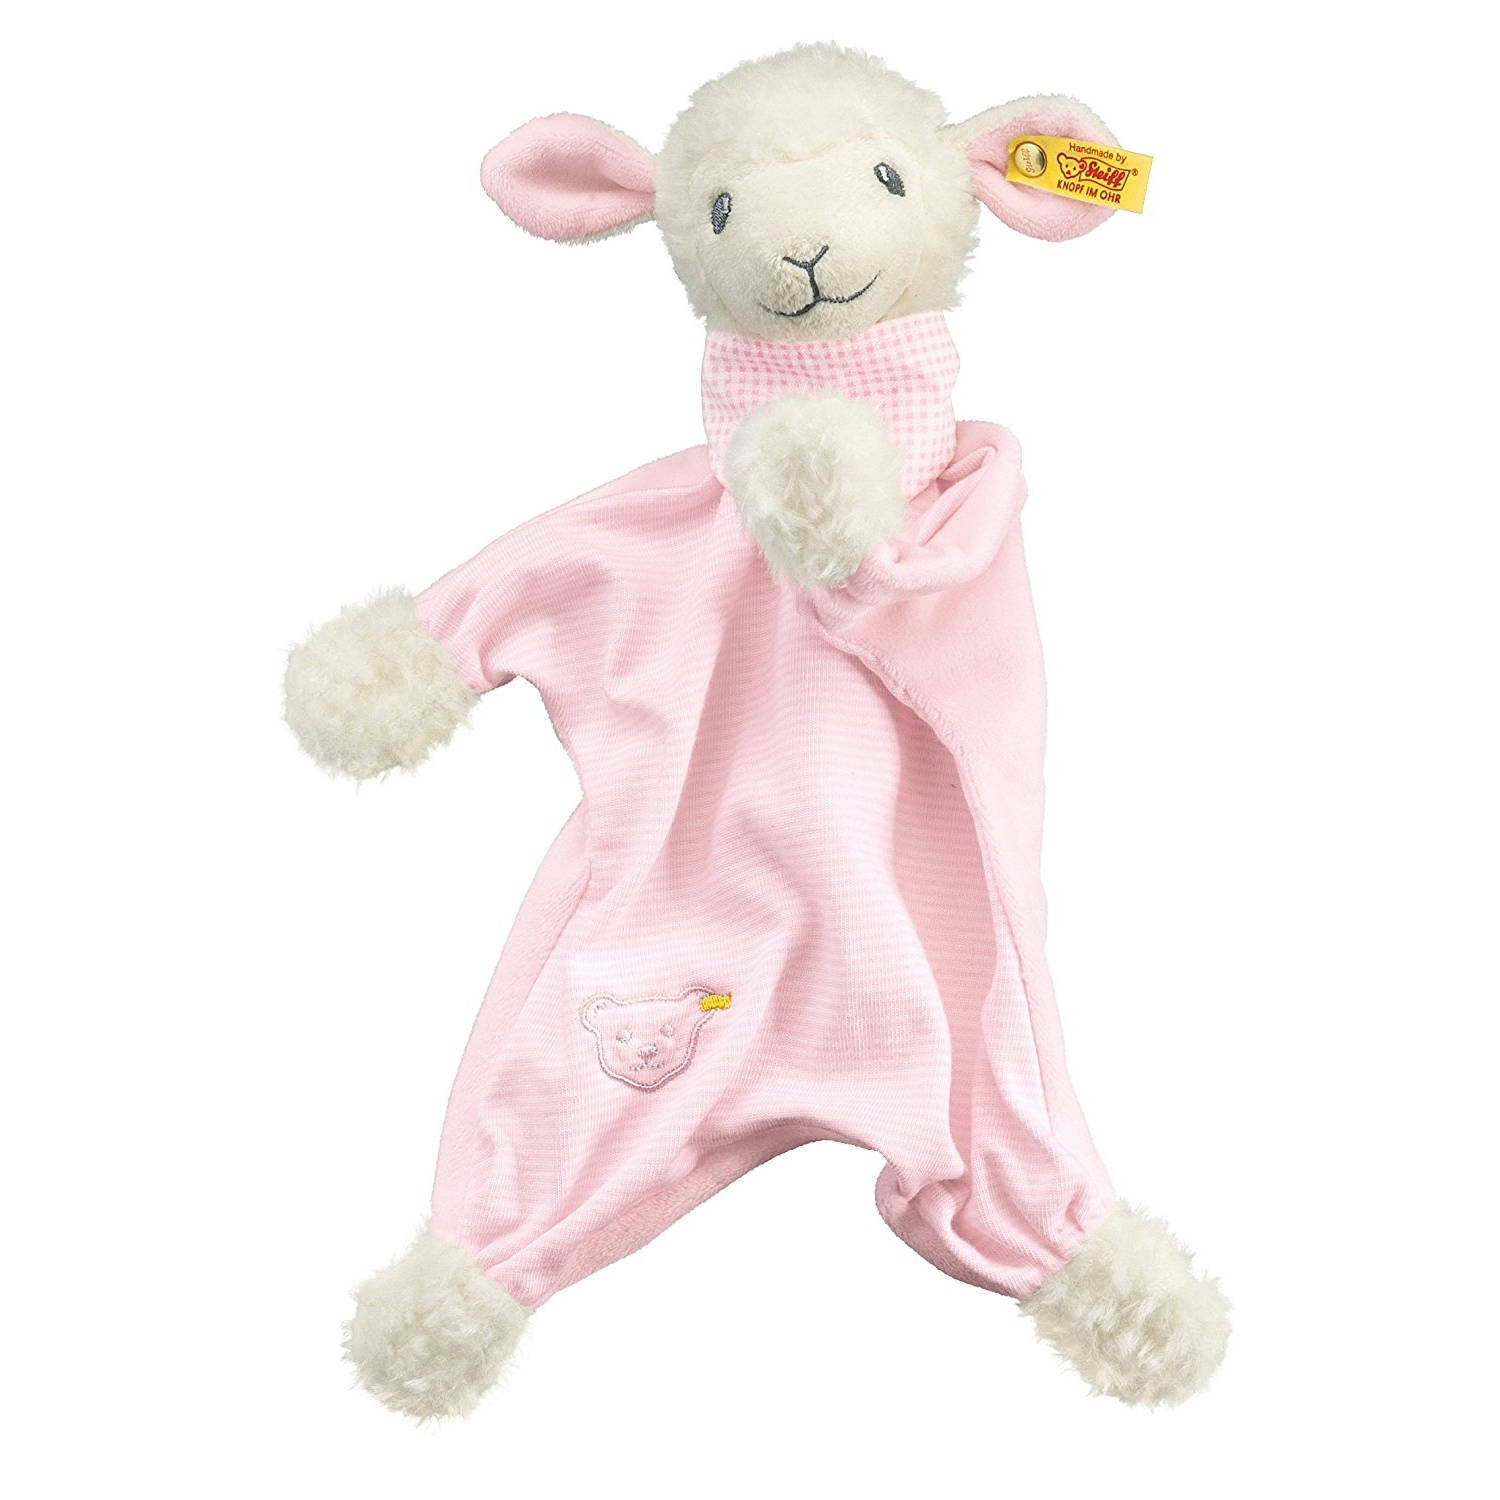 Steiff Sweet dreams lamb comforter, pink